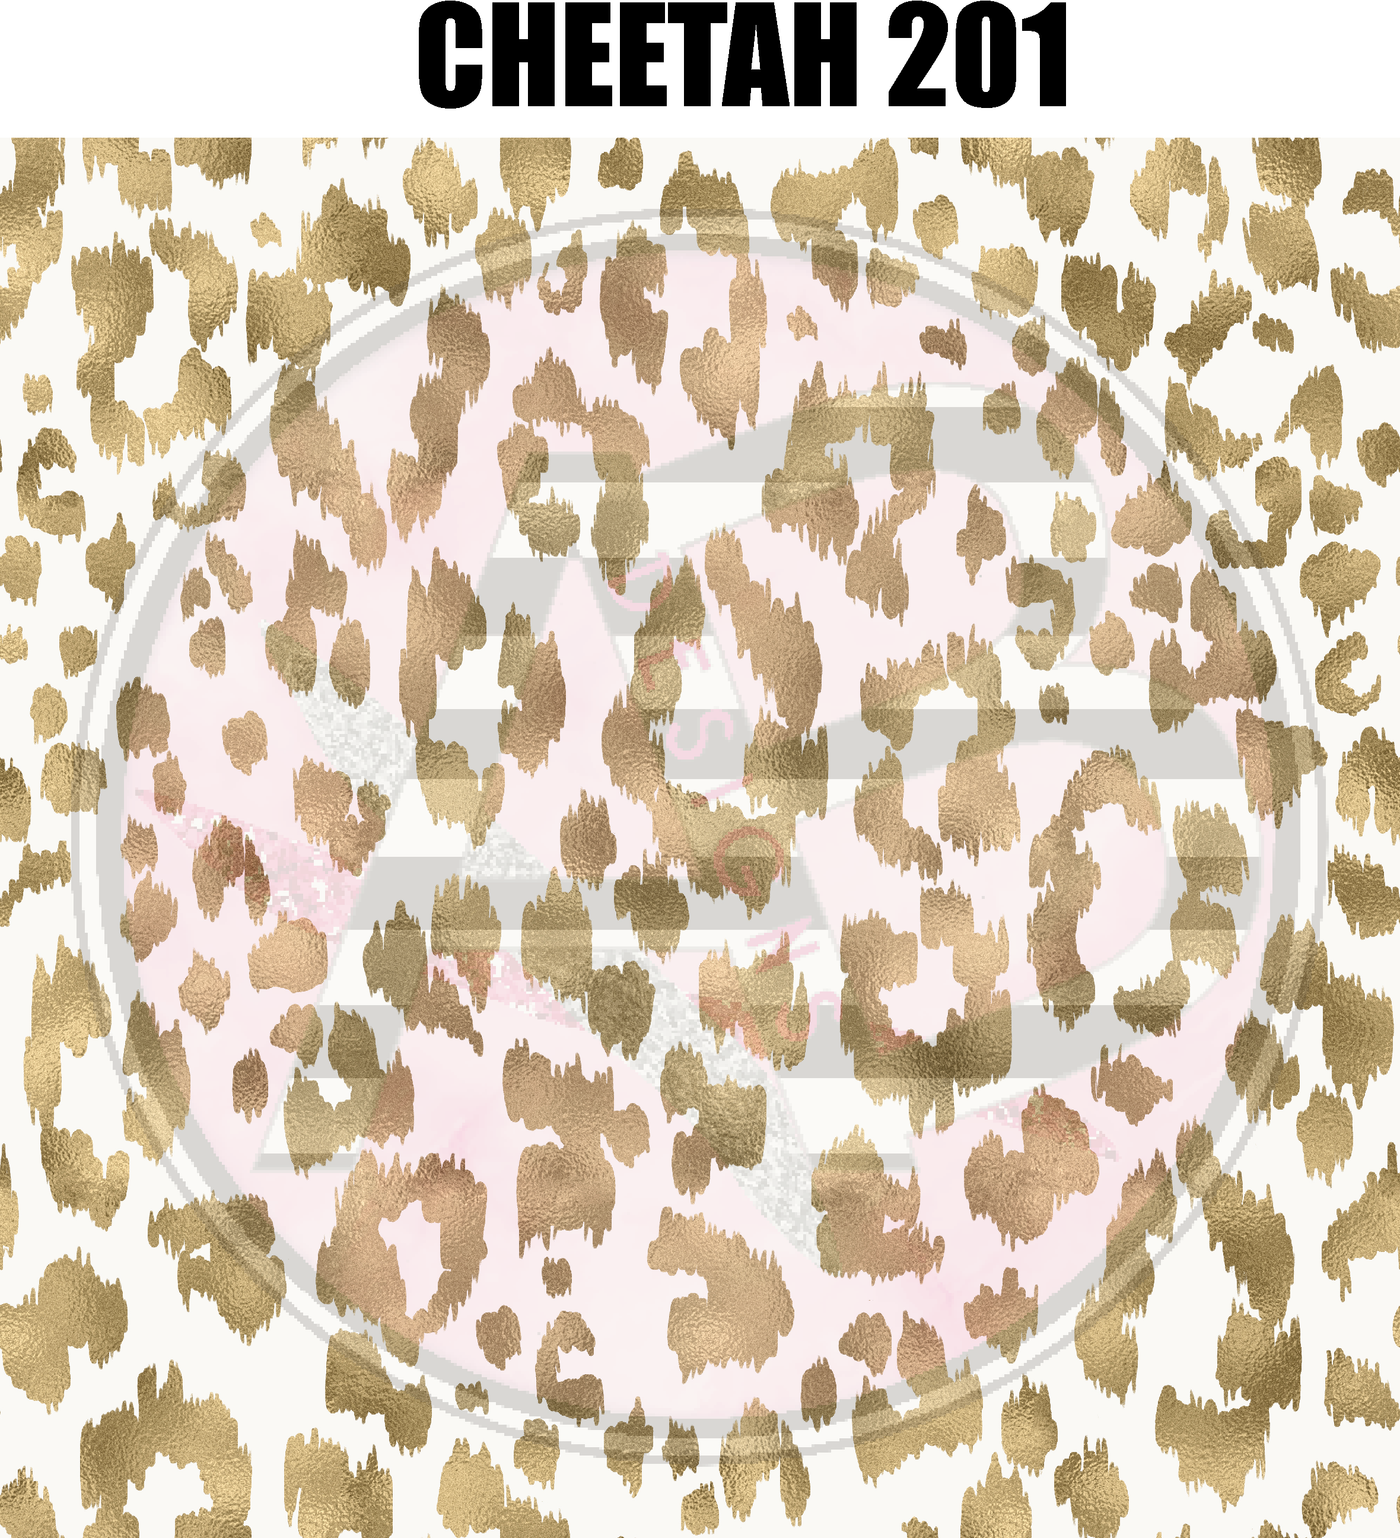 Adhesive Patterned Vinyl - Cheetah 201